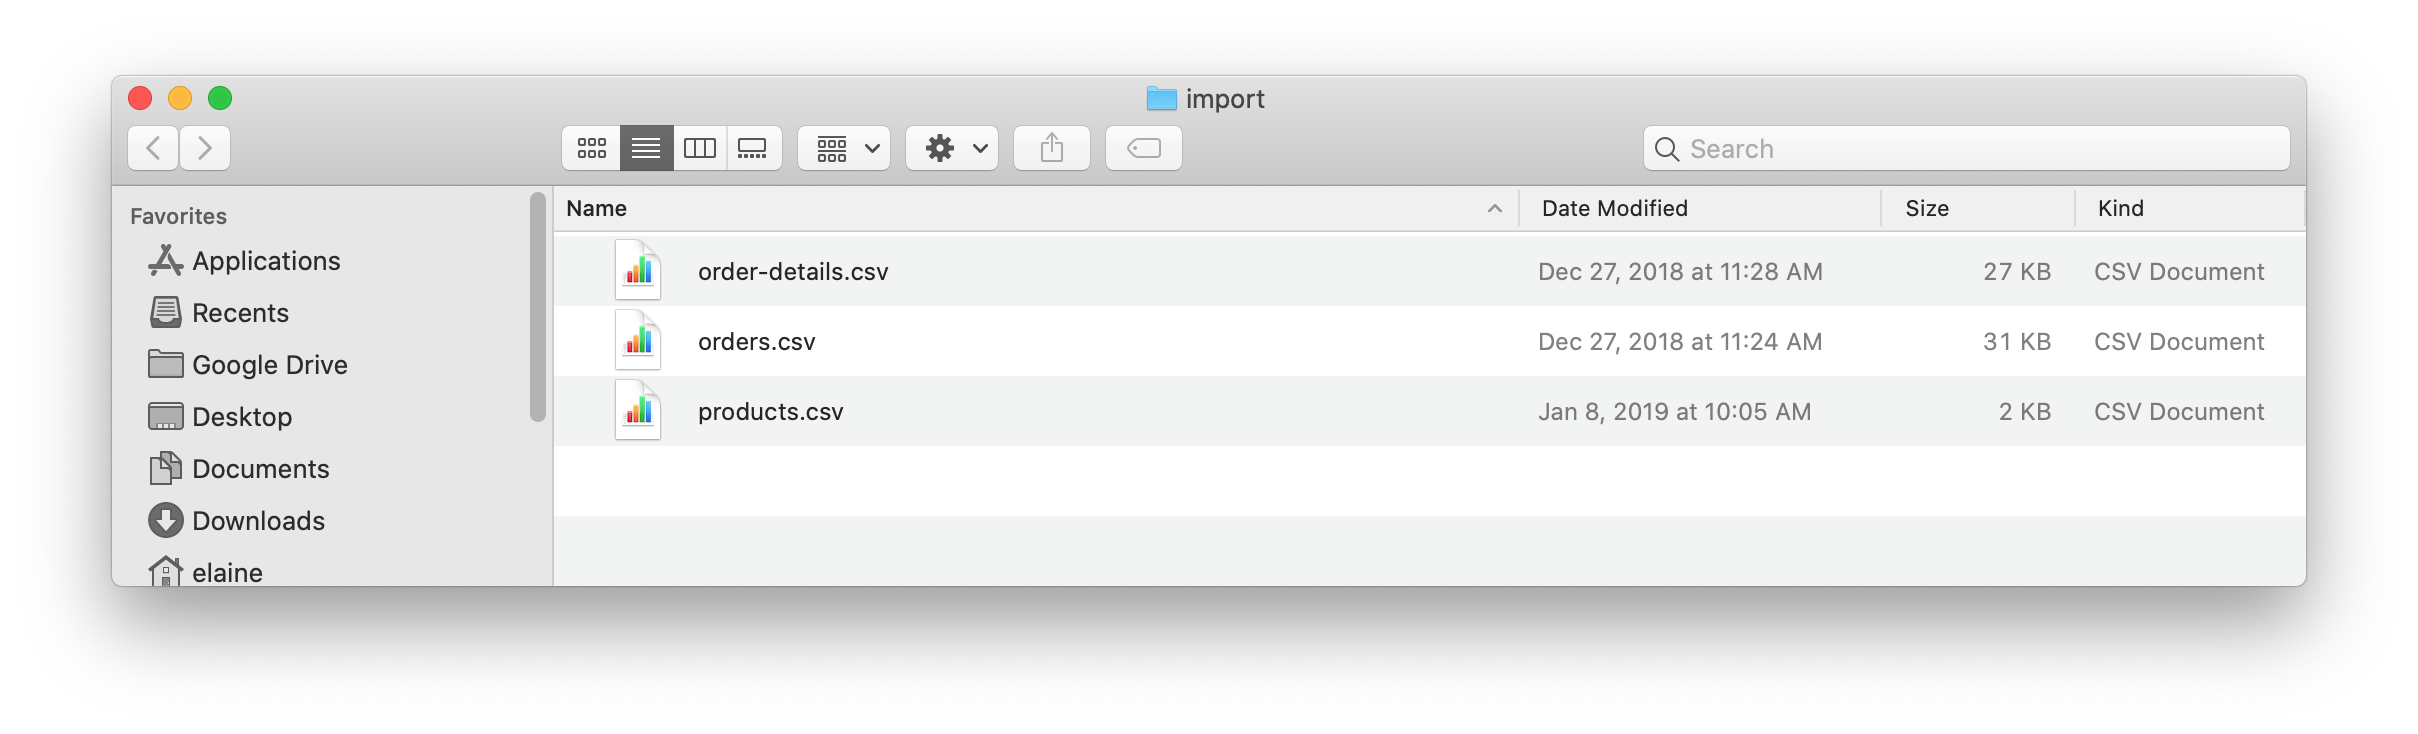 developer desktop csv import files for import